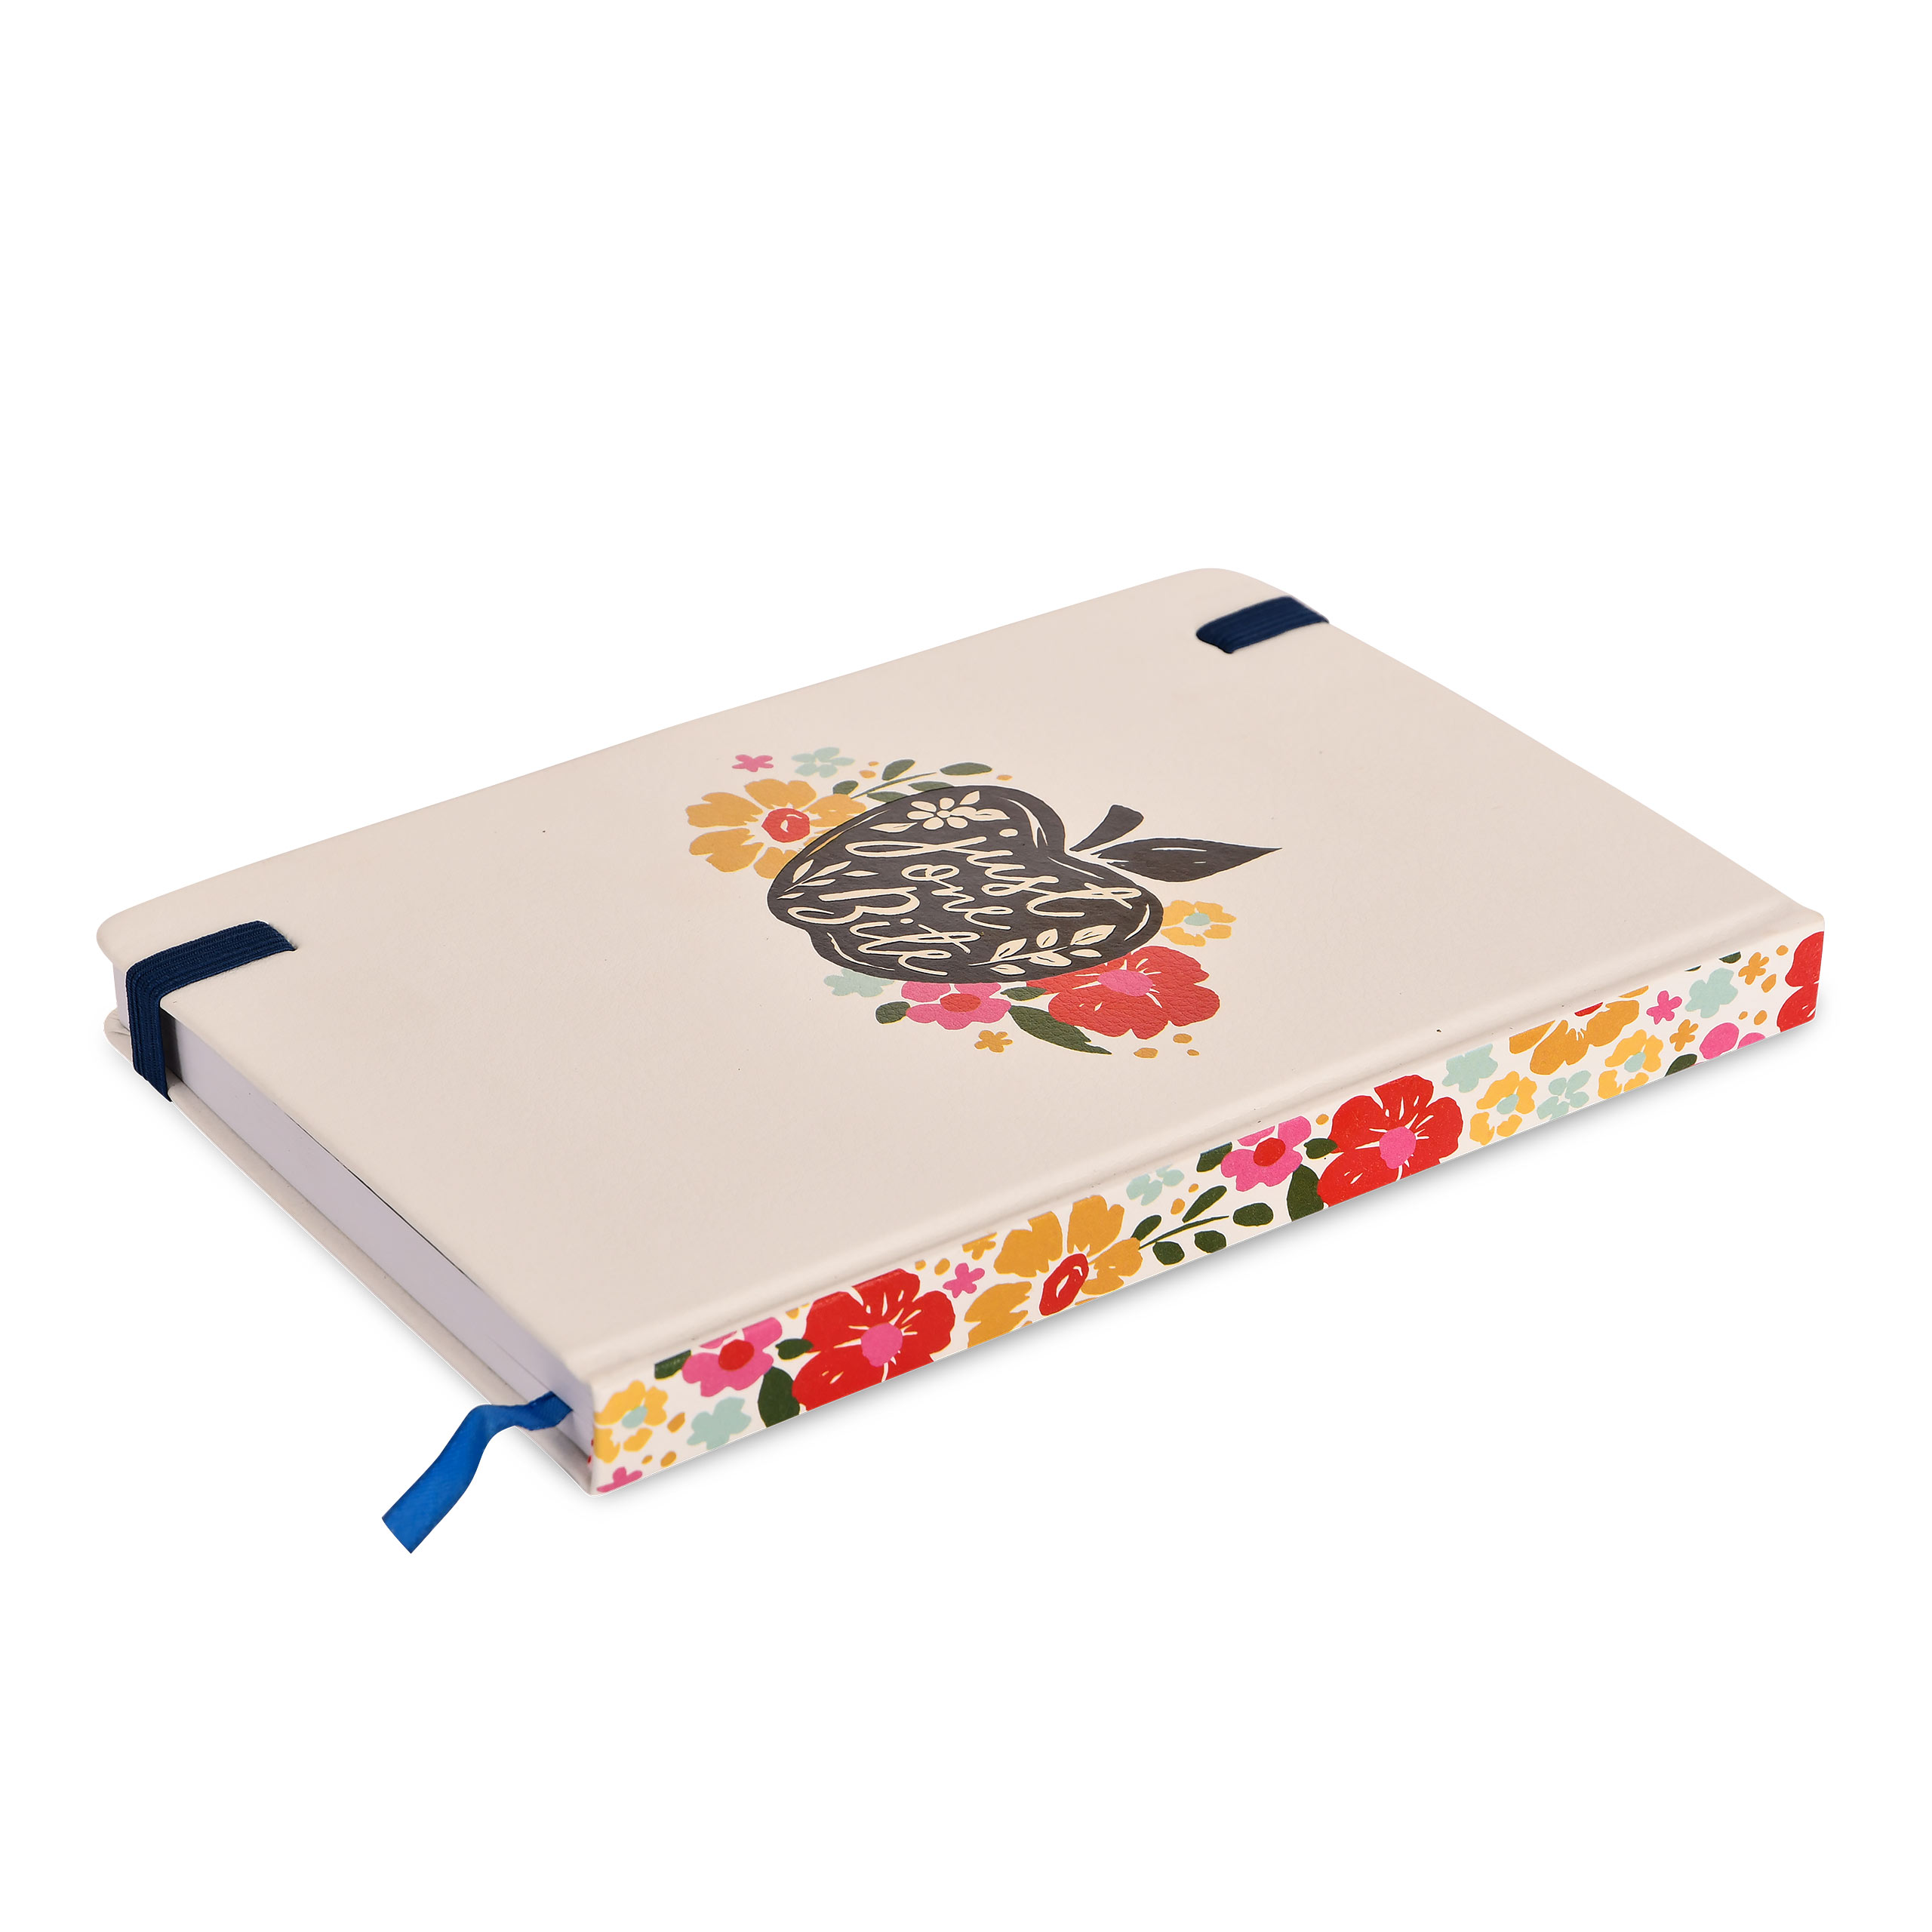 Snow White - Just one Bite Premium Notebook A5